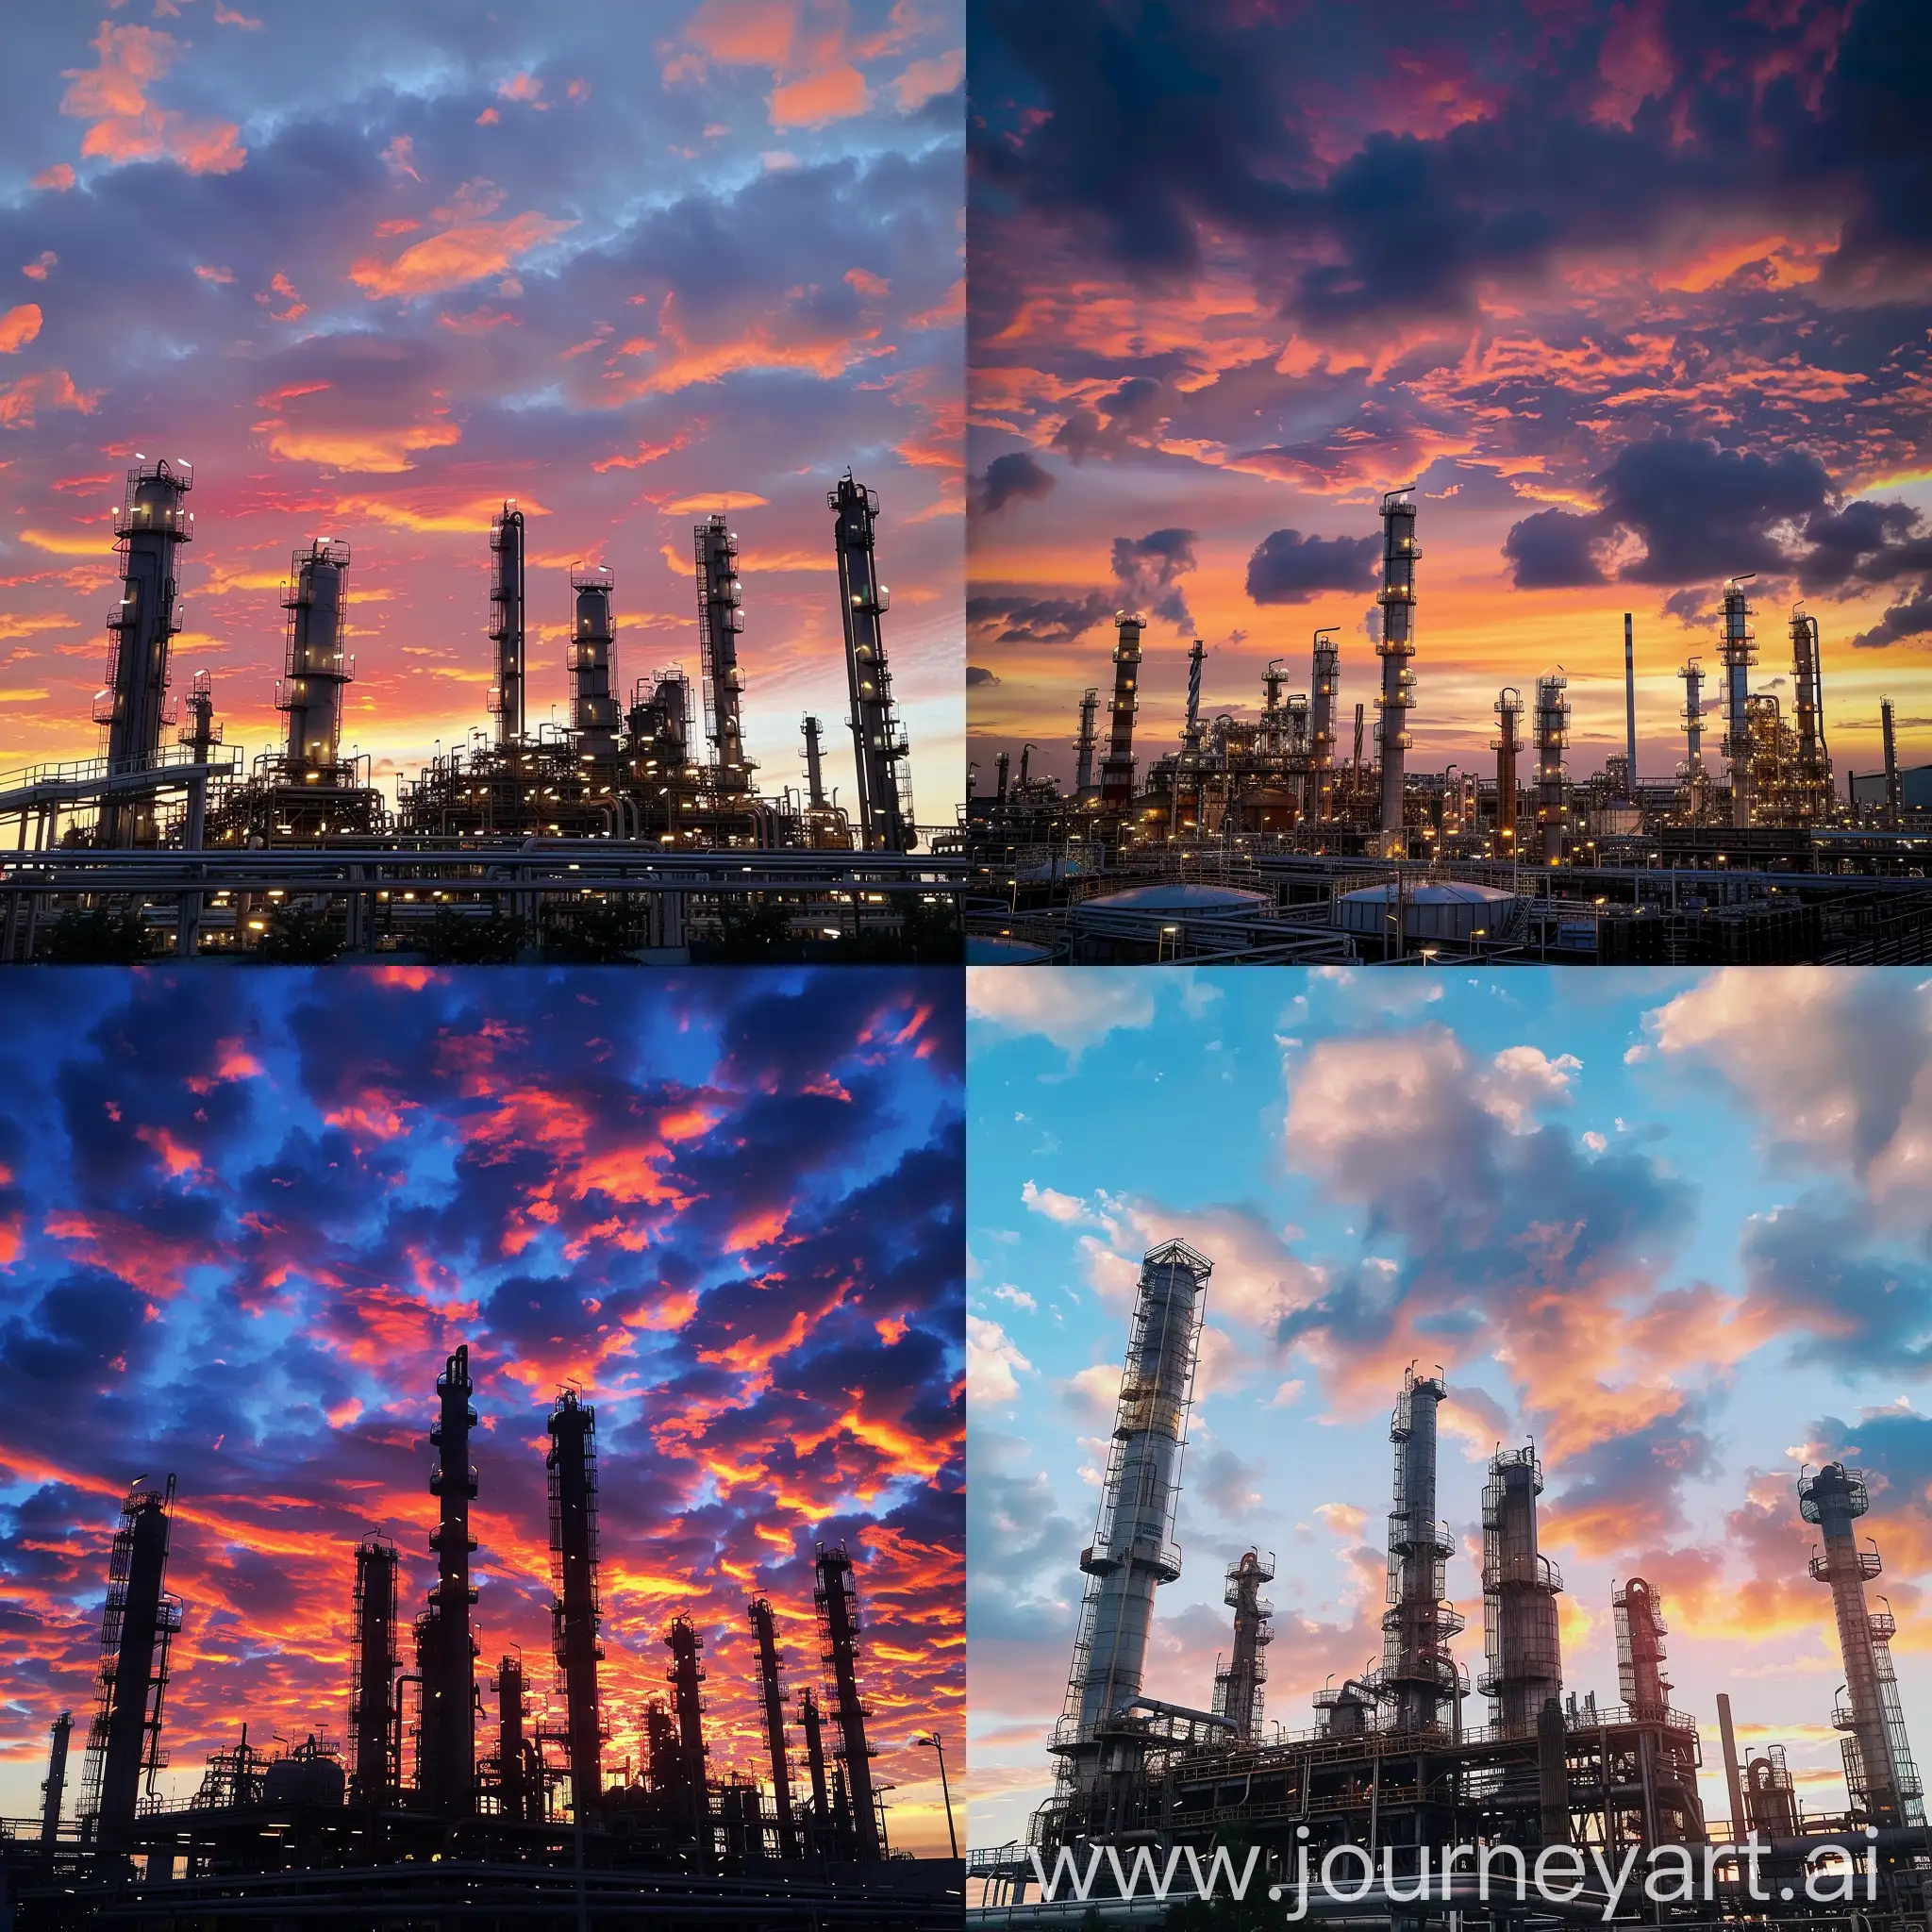 Scenic-Refinery-with-Vibrant-Sky